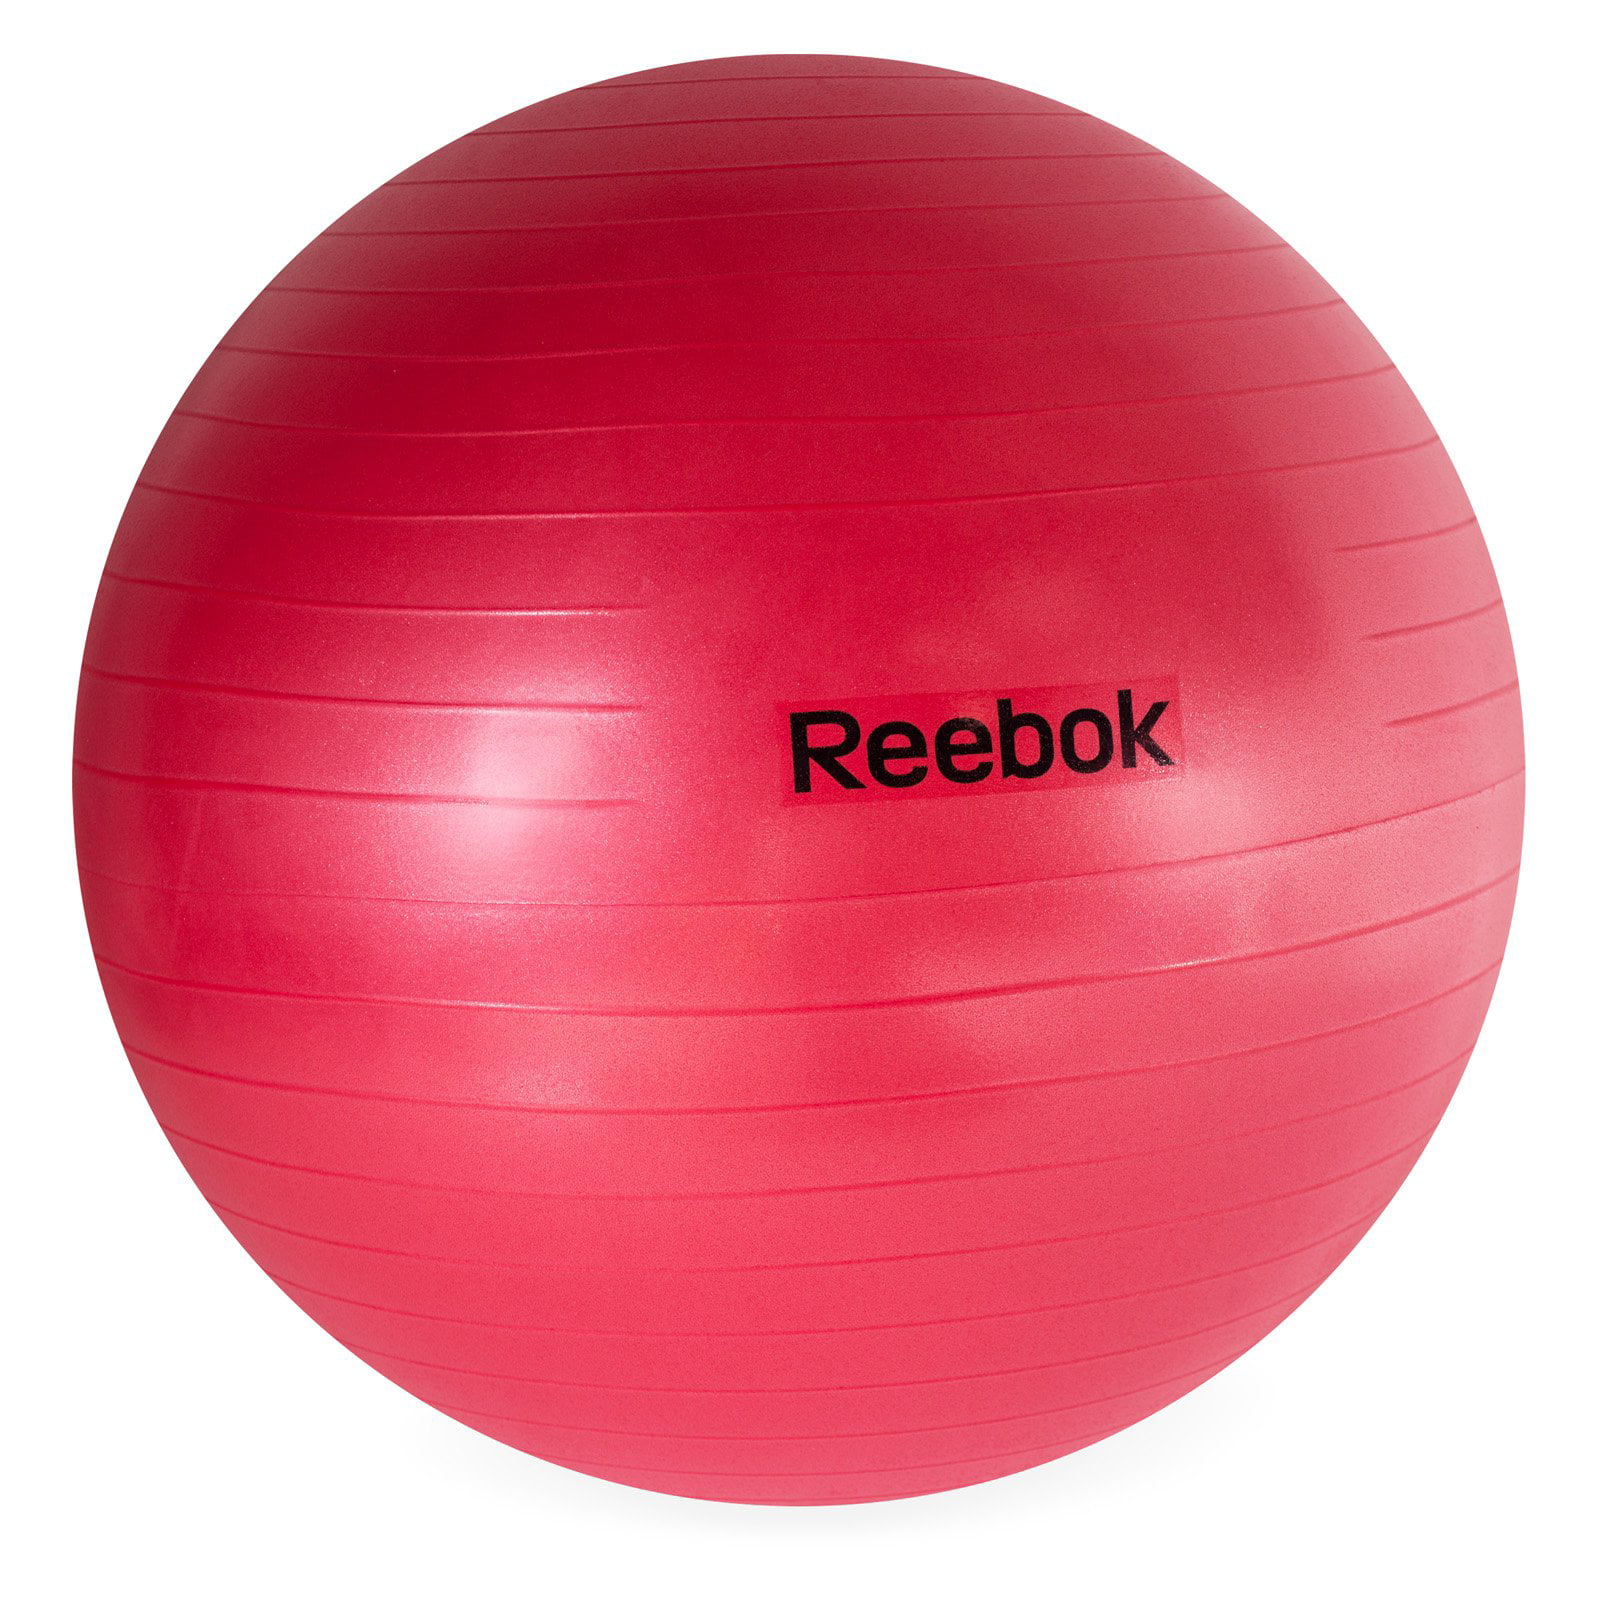 To detect Holdall Responsible person Reebok Gym Ball - Walmart.com